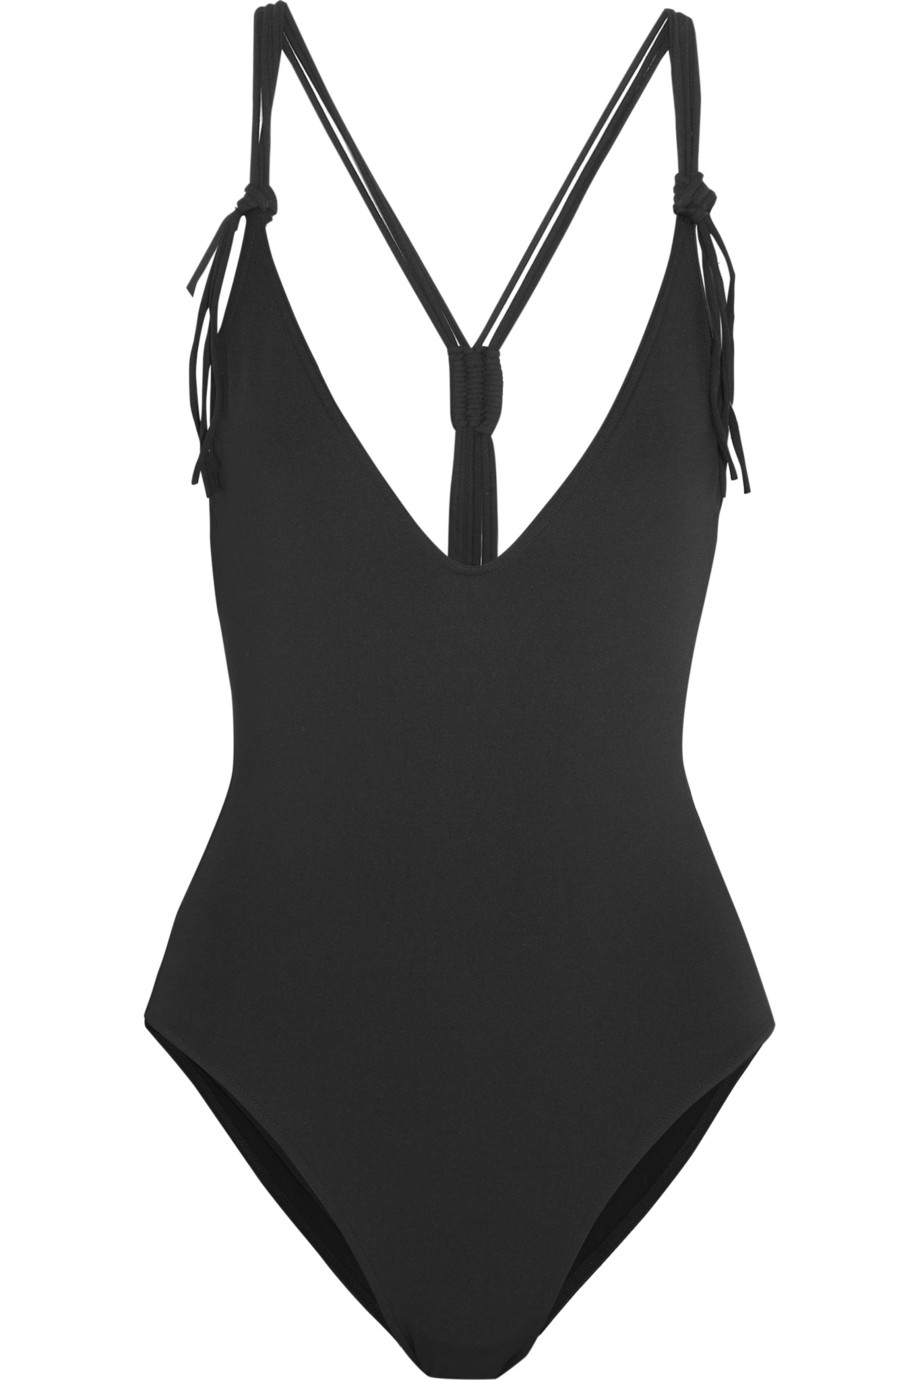 Lyst - Eres Spotlight Groupie Macramé-Trimmed Swimsuit in Black